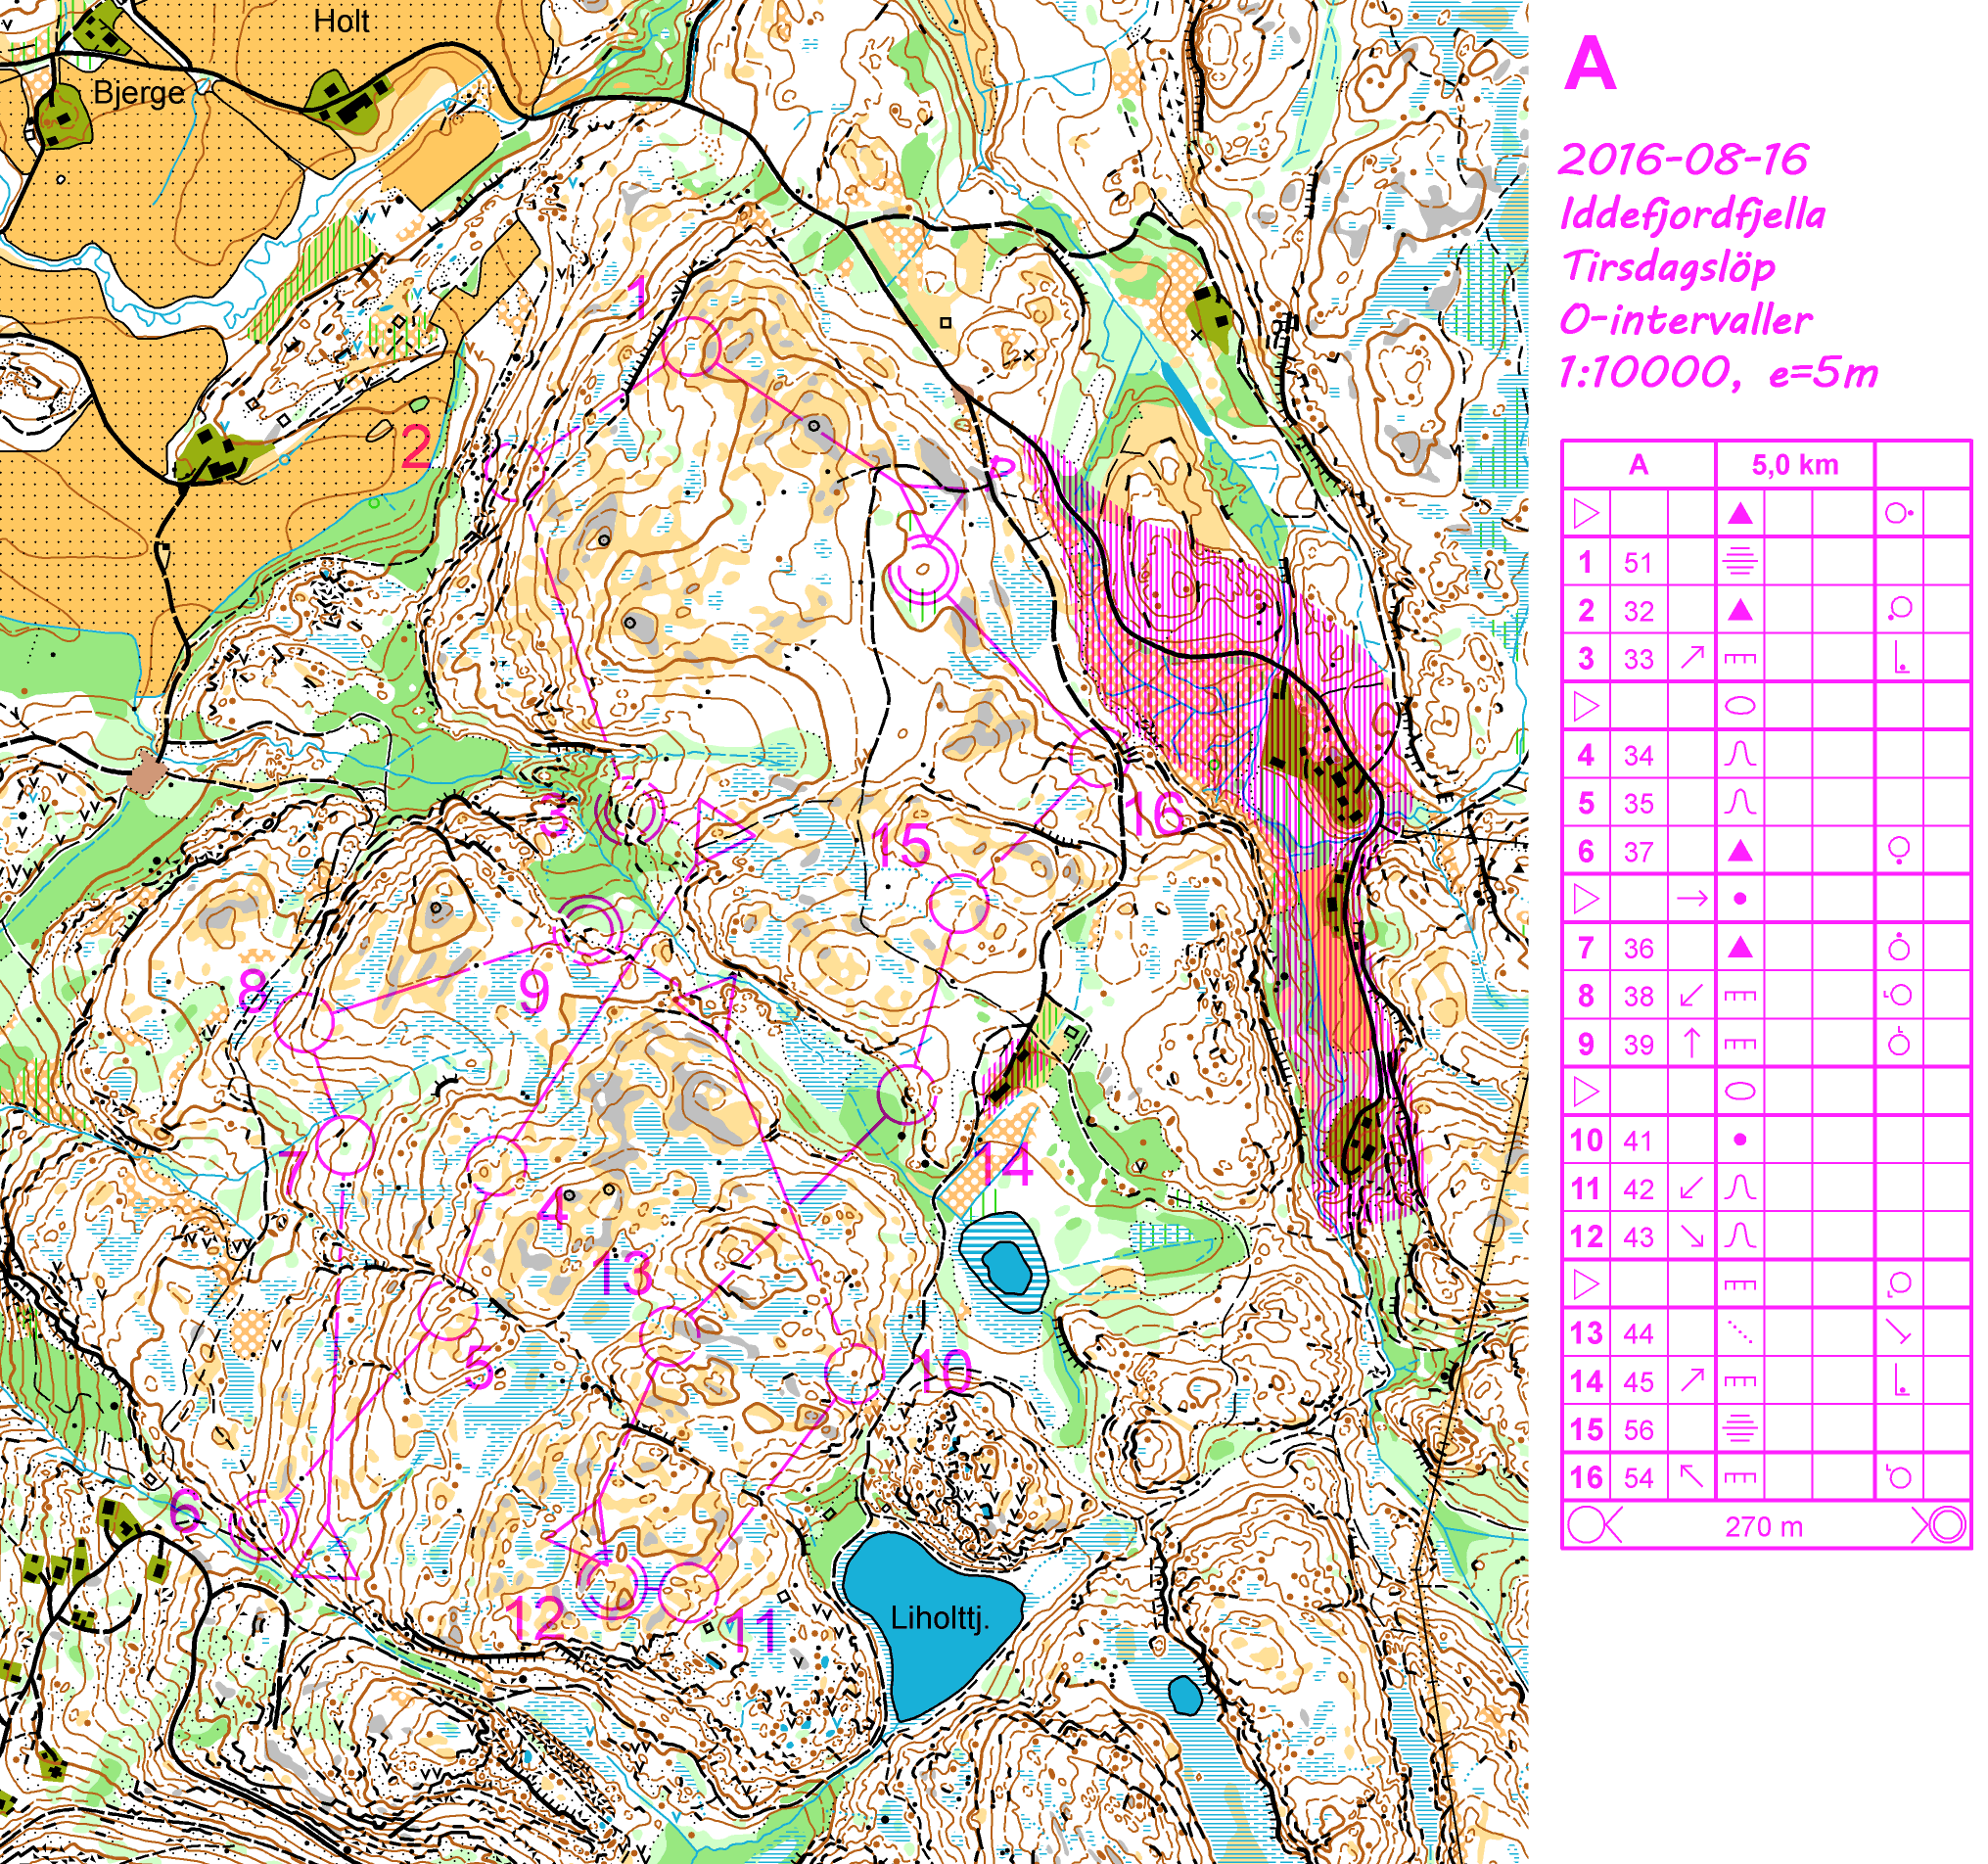 Tirsdagsløp iddefjordfjella (15-08-2016)